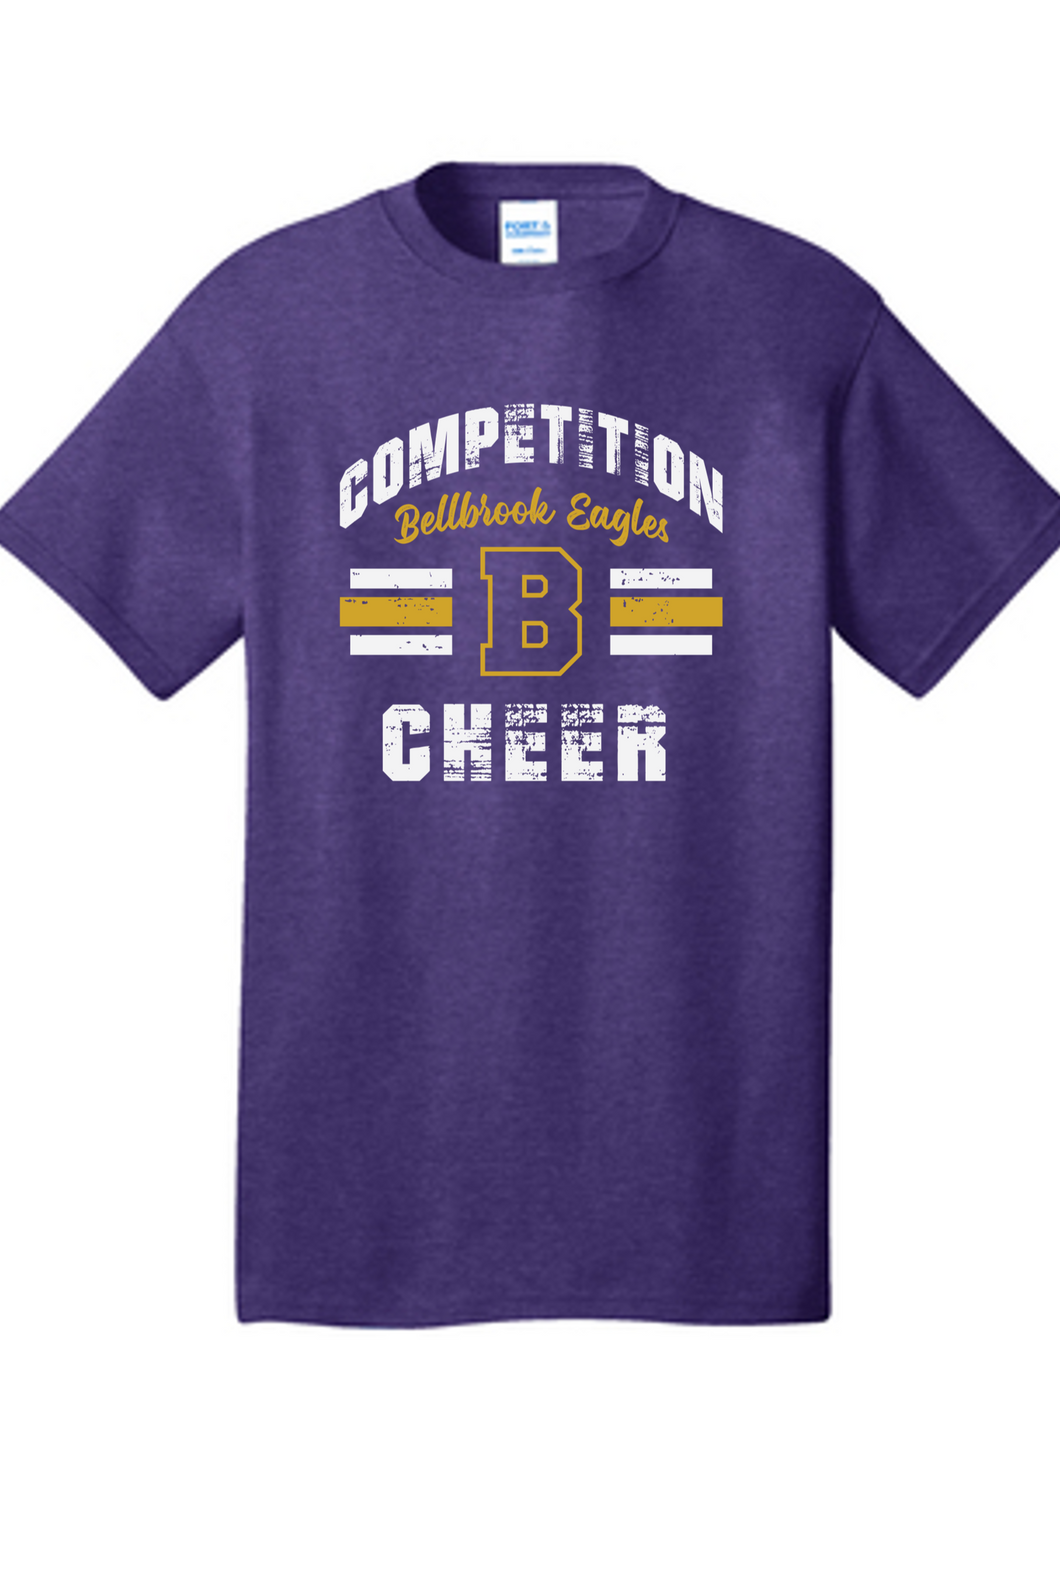 Competition Cheer Block B Purple Heather T-Shirt